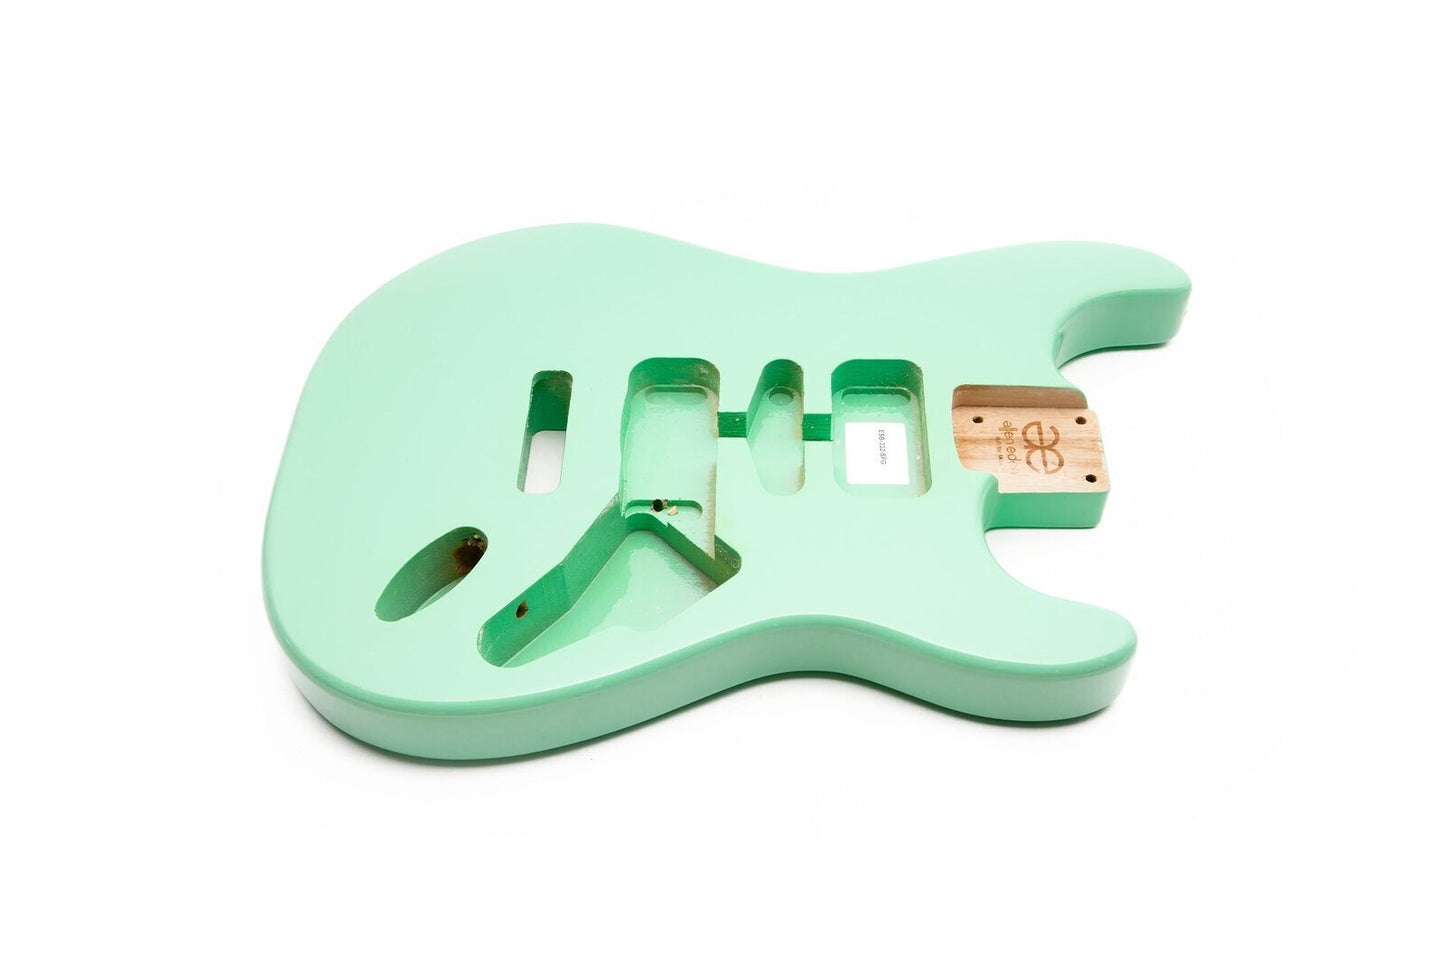 AE Guitars® S-Style Paulownia Replacement Guitar Body Seafoam Green